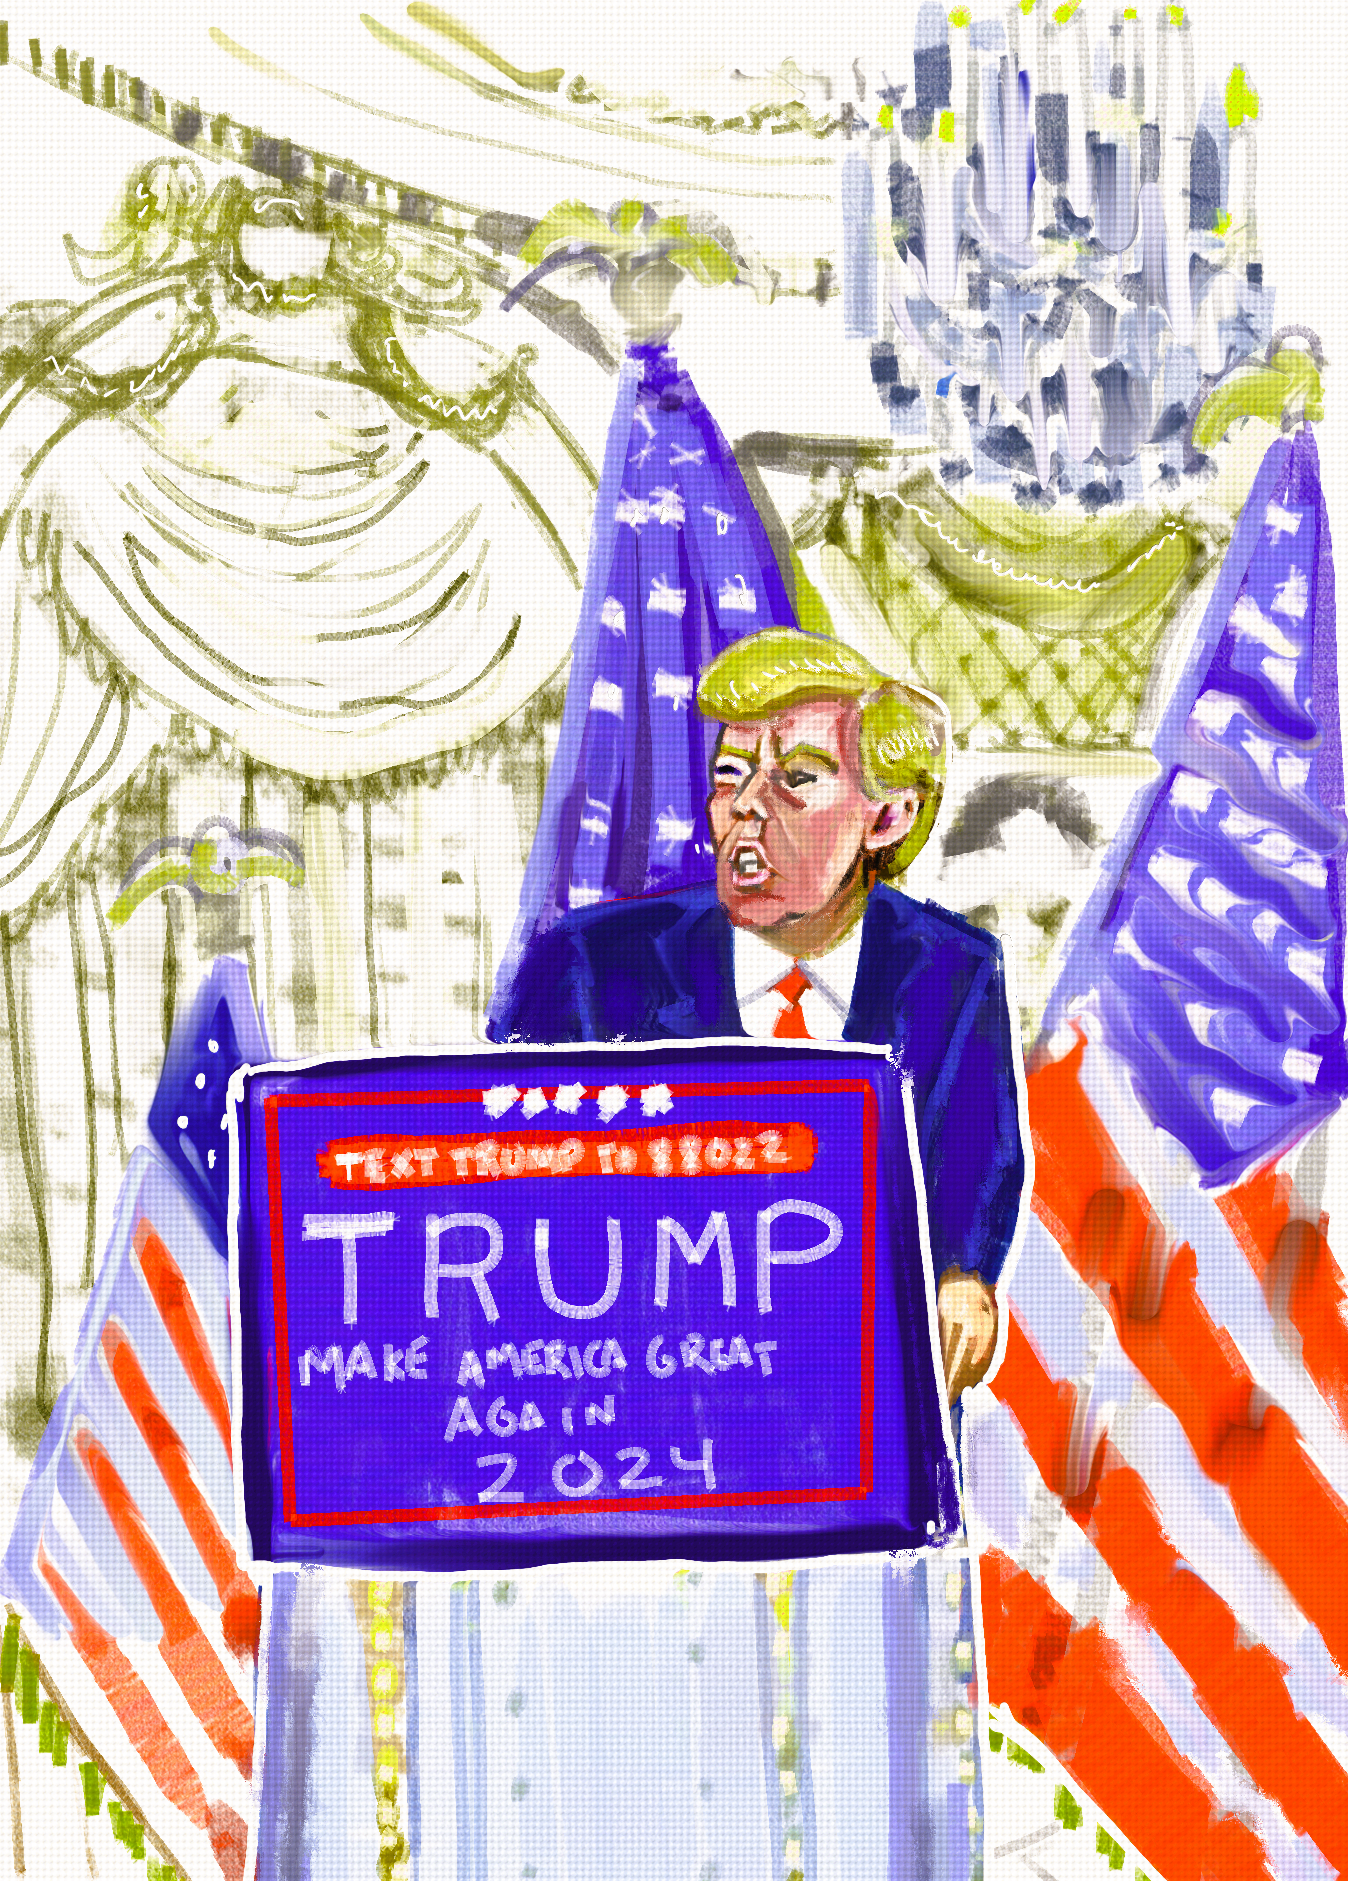 Donald Trump Mar a Lago Minimalist Realism Oil painting NFT post thumbnail image